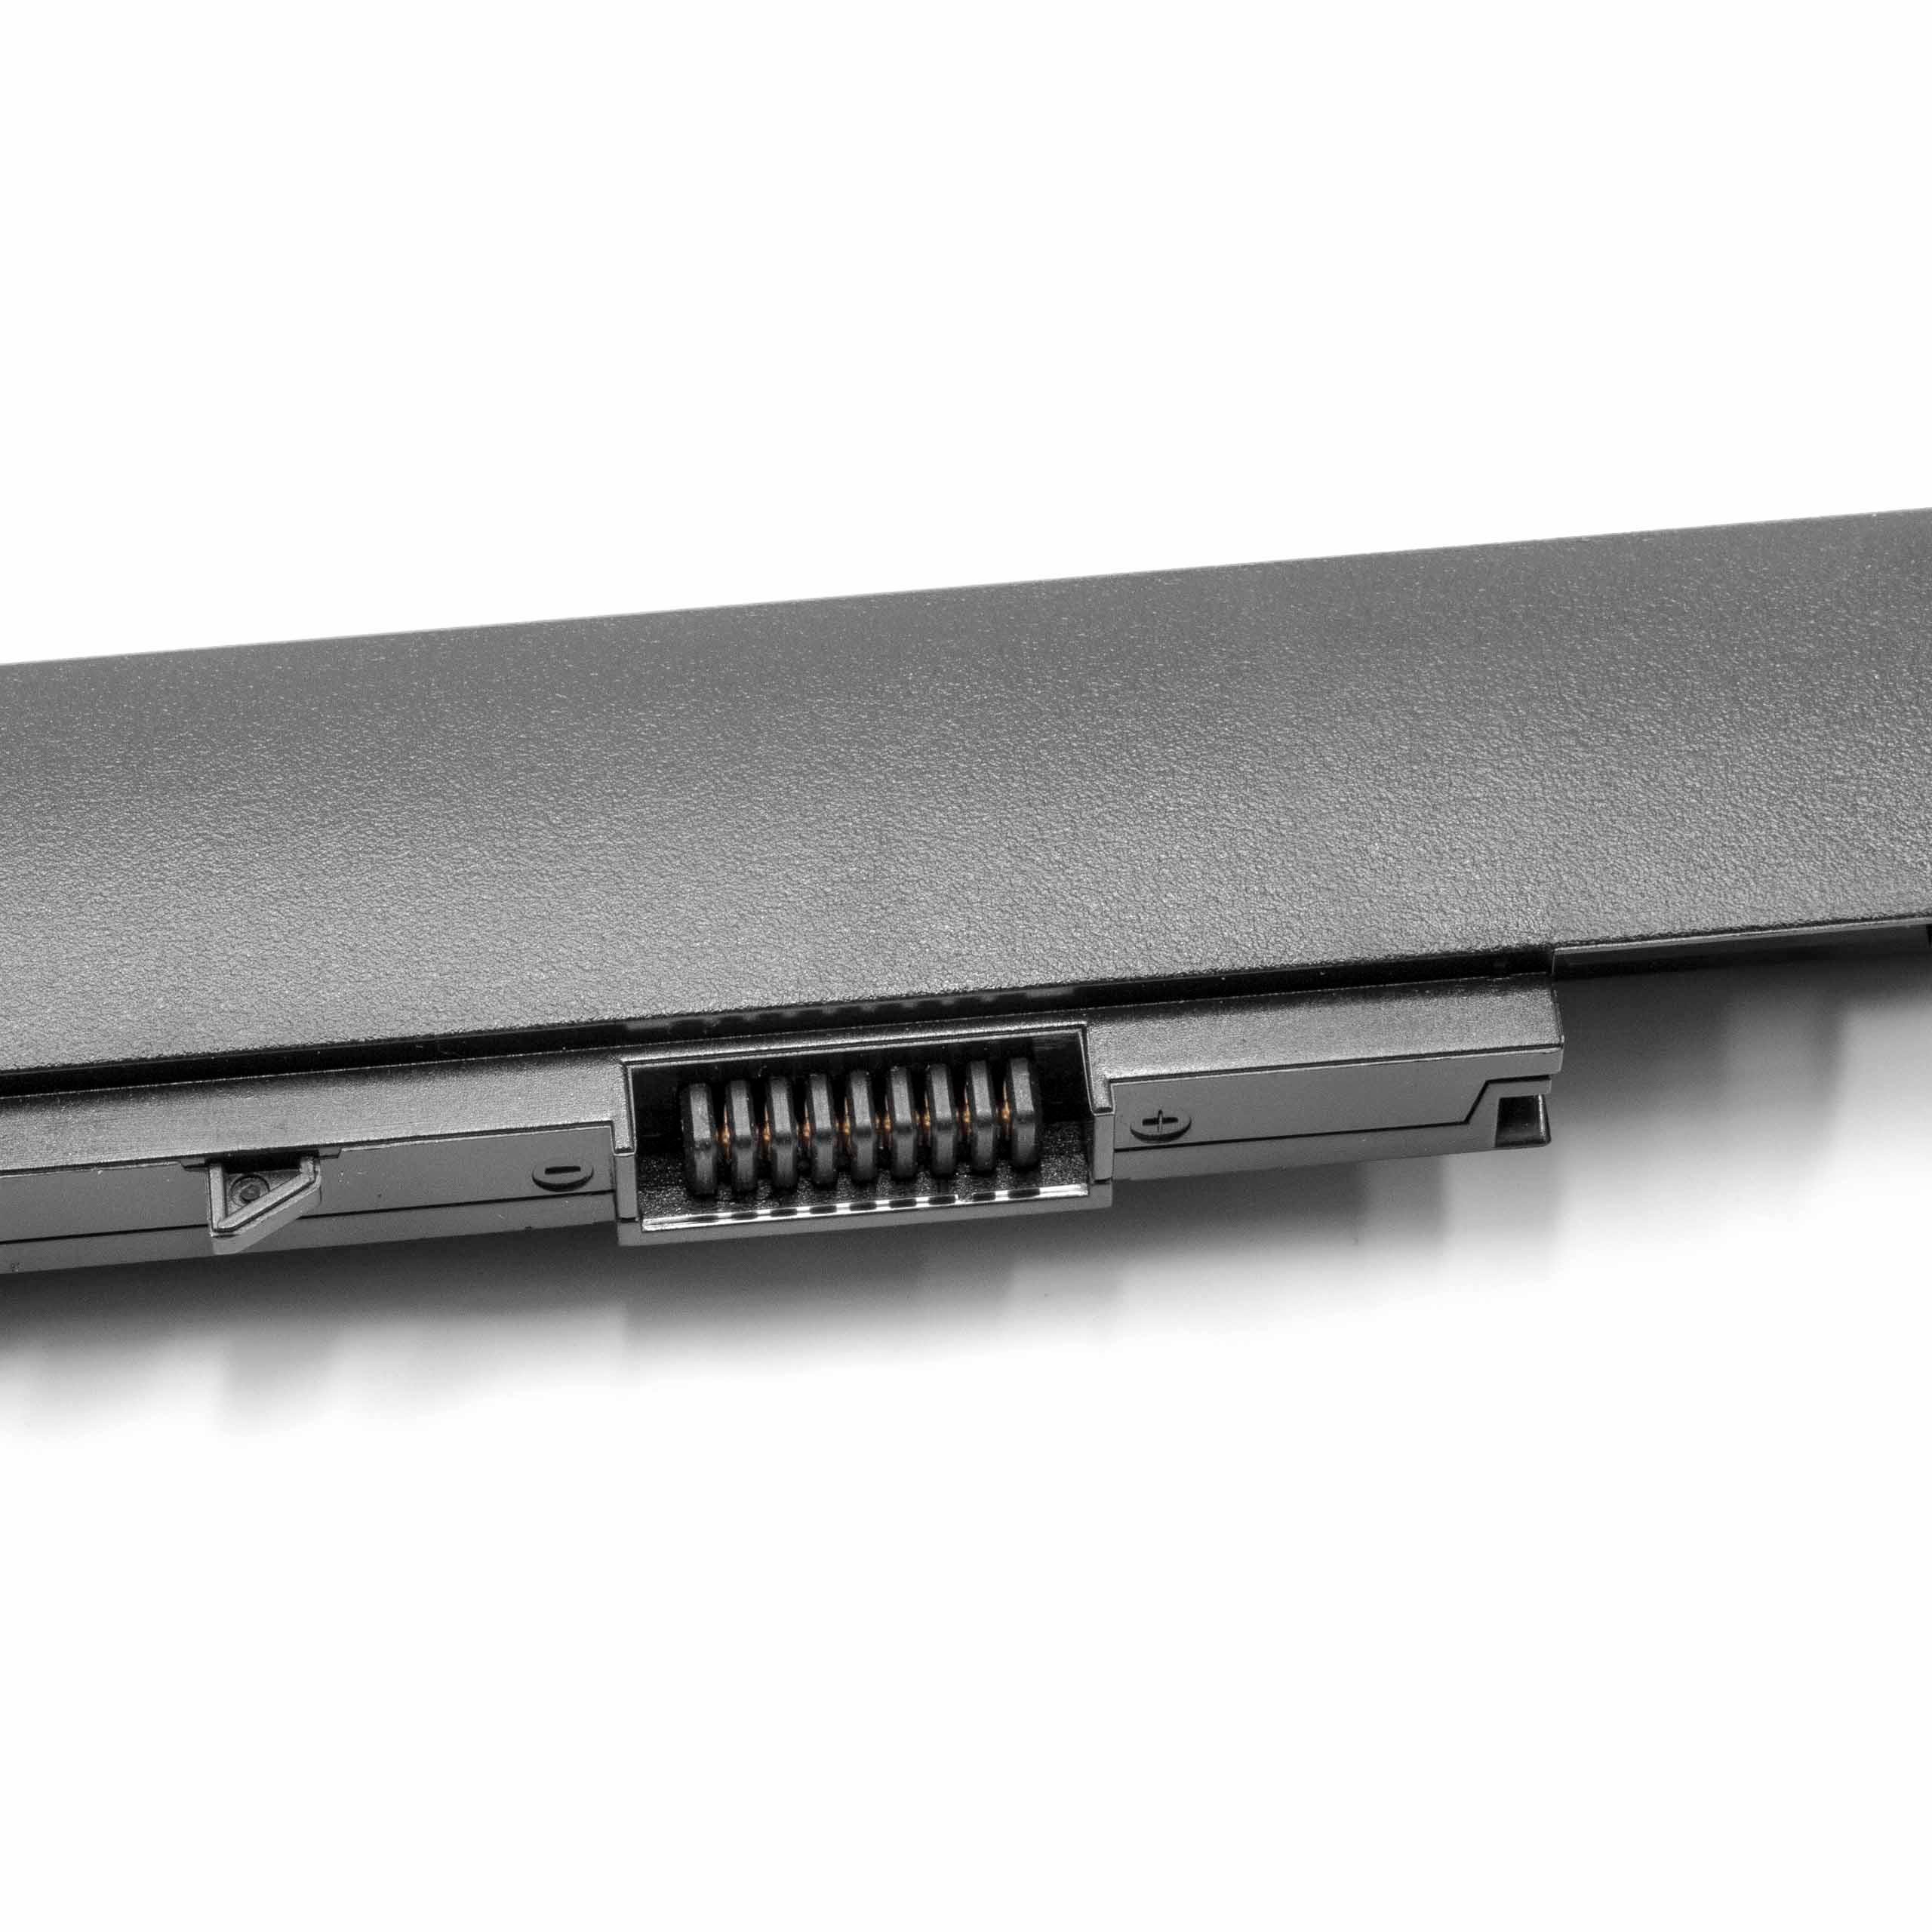 Akumulator do laptopa zamiennik HP 807611-141, 807611-421, 807611-131 - 2600 mAh 14,8 V Li-Ion, czarny